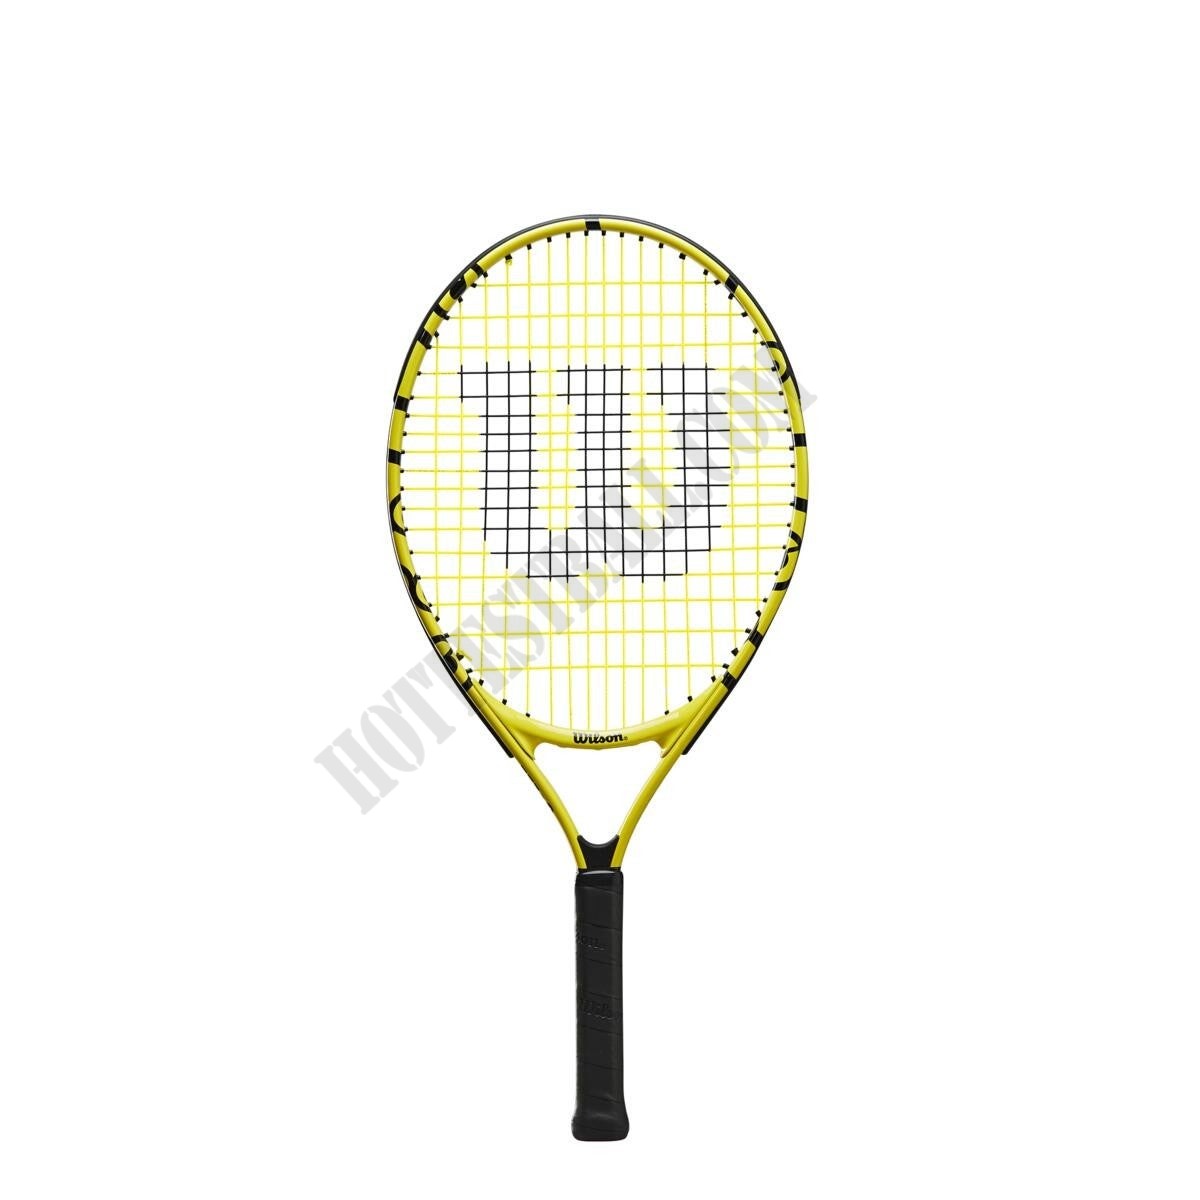 Minions 23 Tennis Racket - Wilson Discount Store - Minions 23 Tennis Racket - Wilson Discount Store